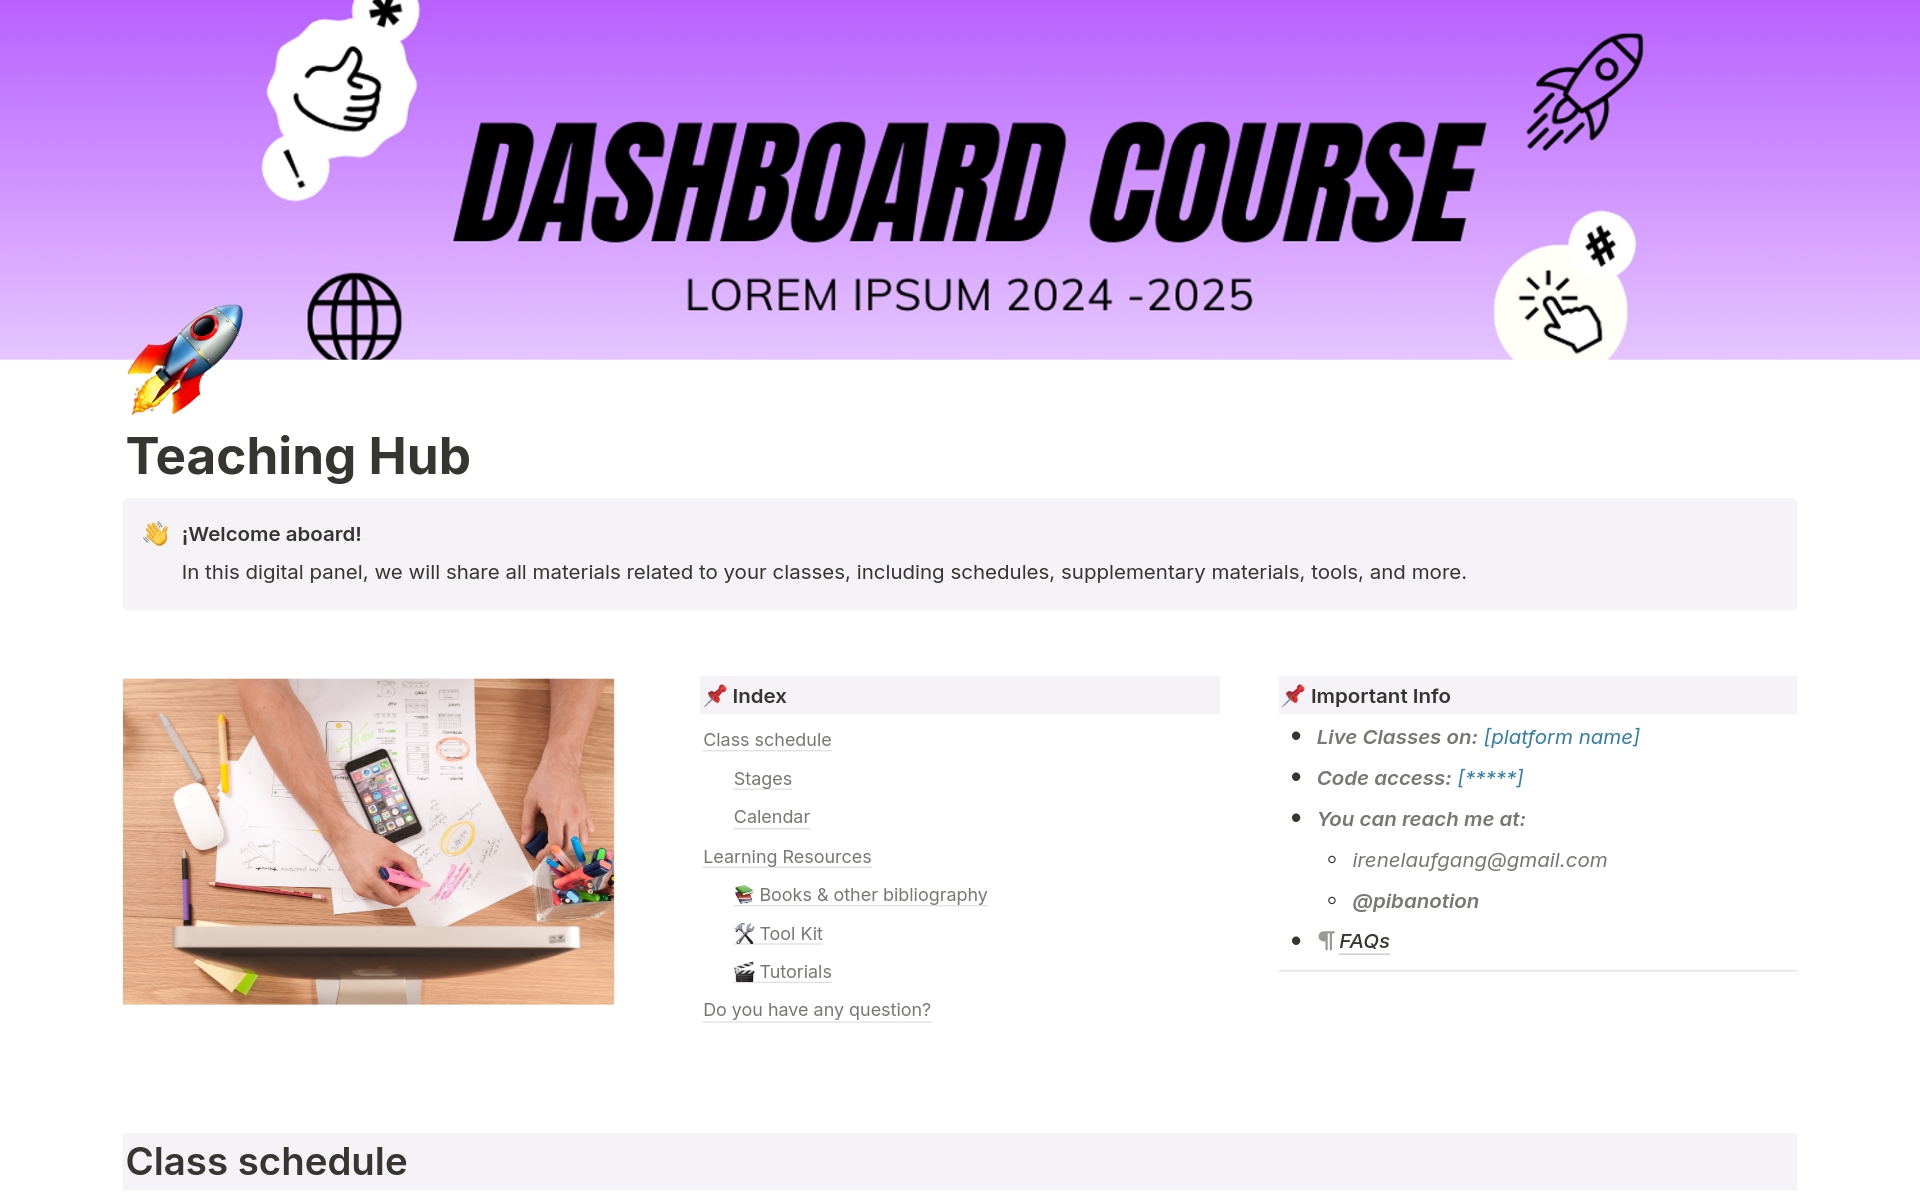 Aperçu du modèle de Course Dashboard | Teaching Hub